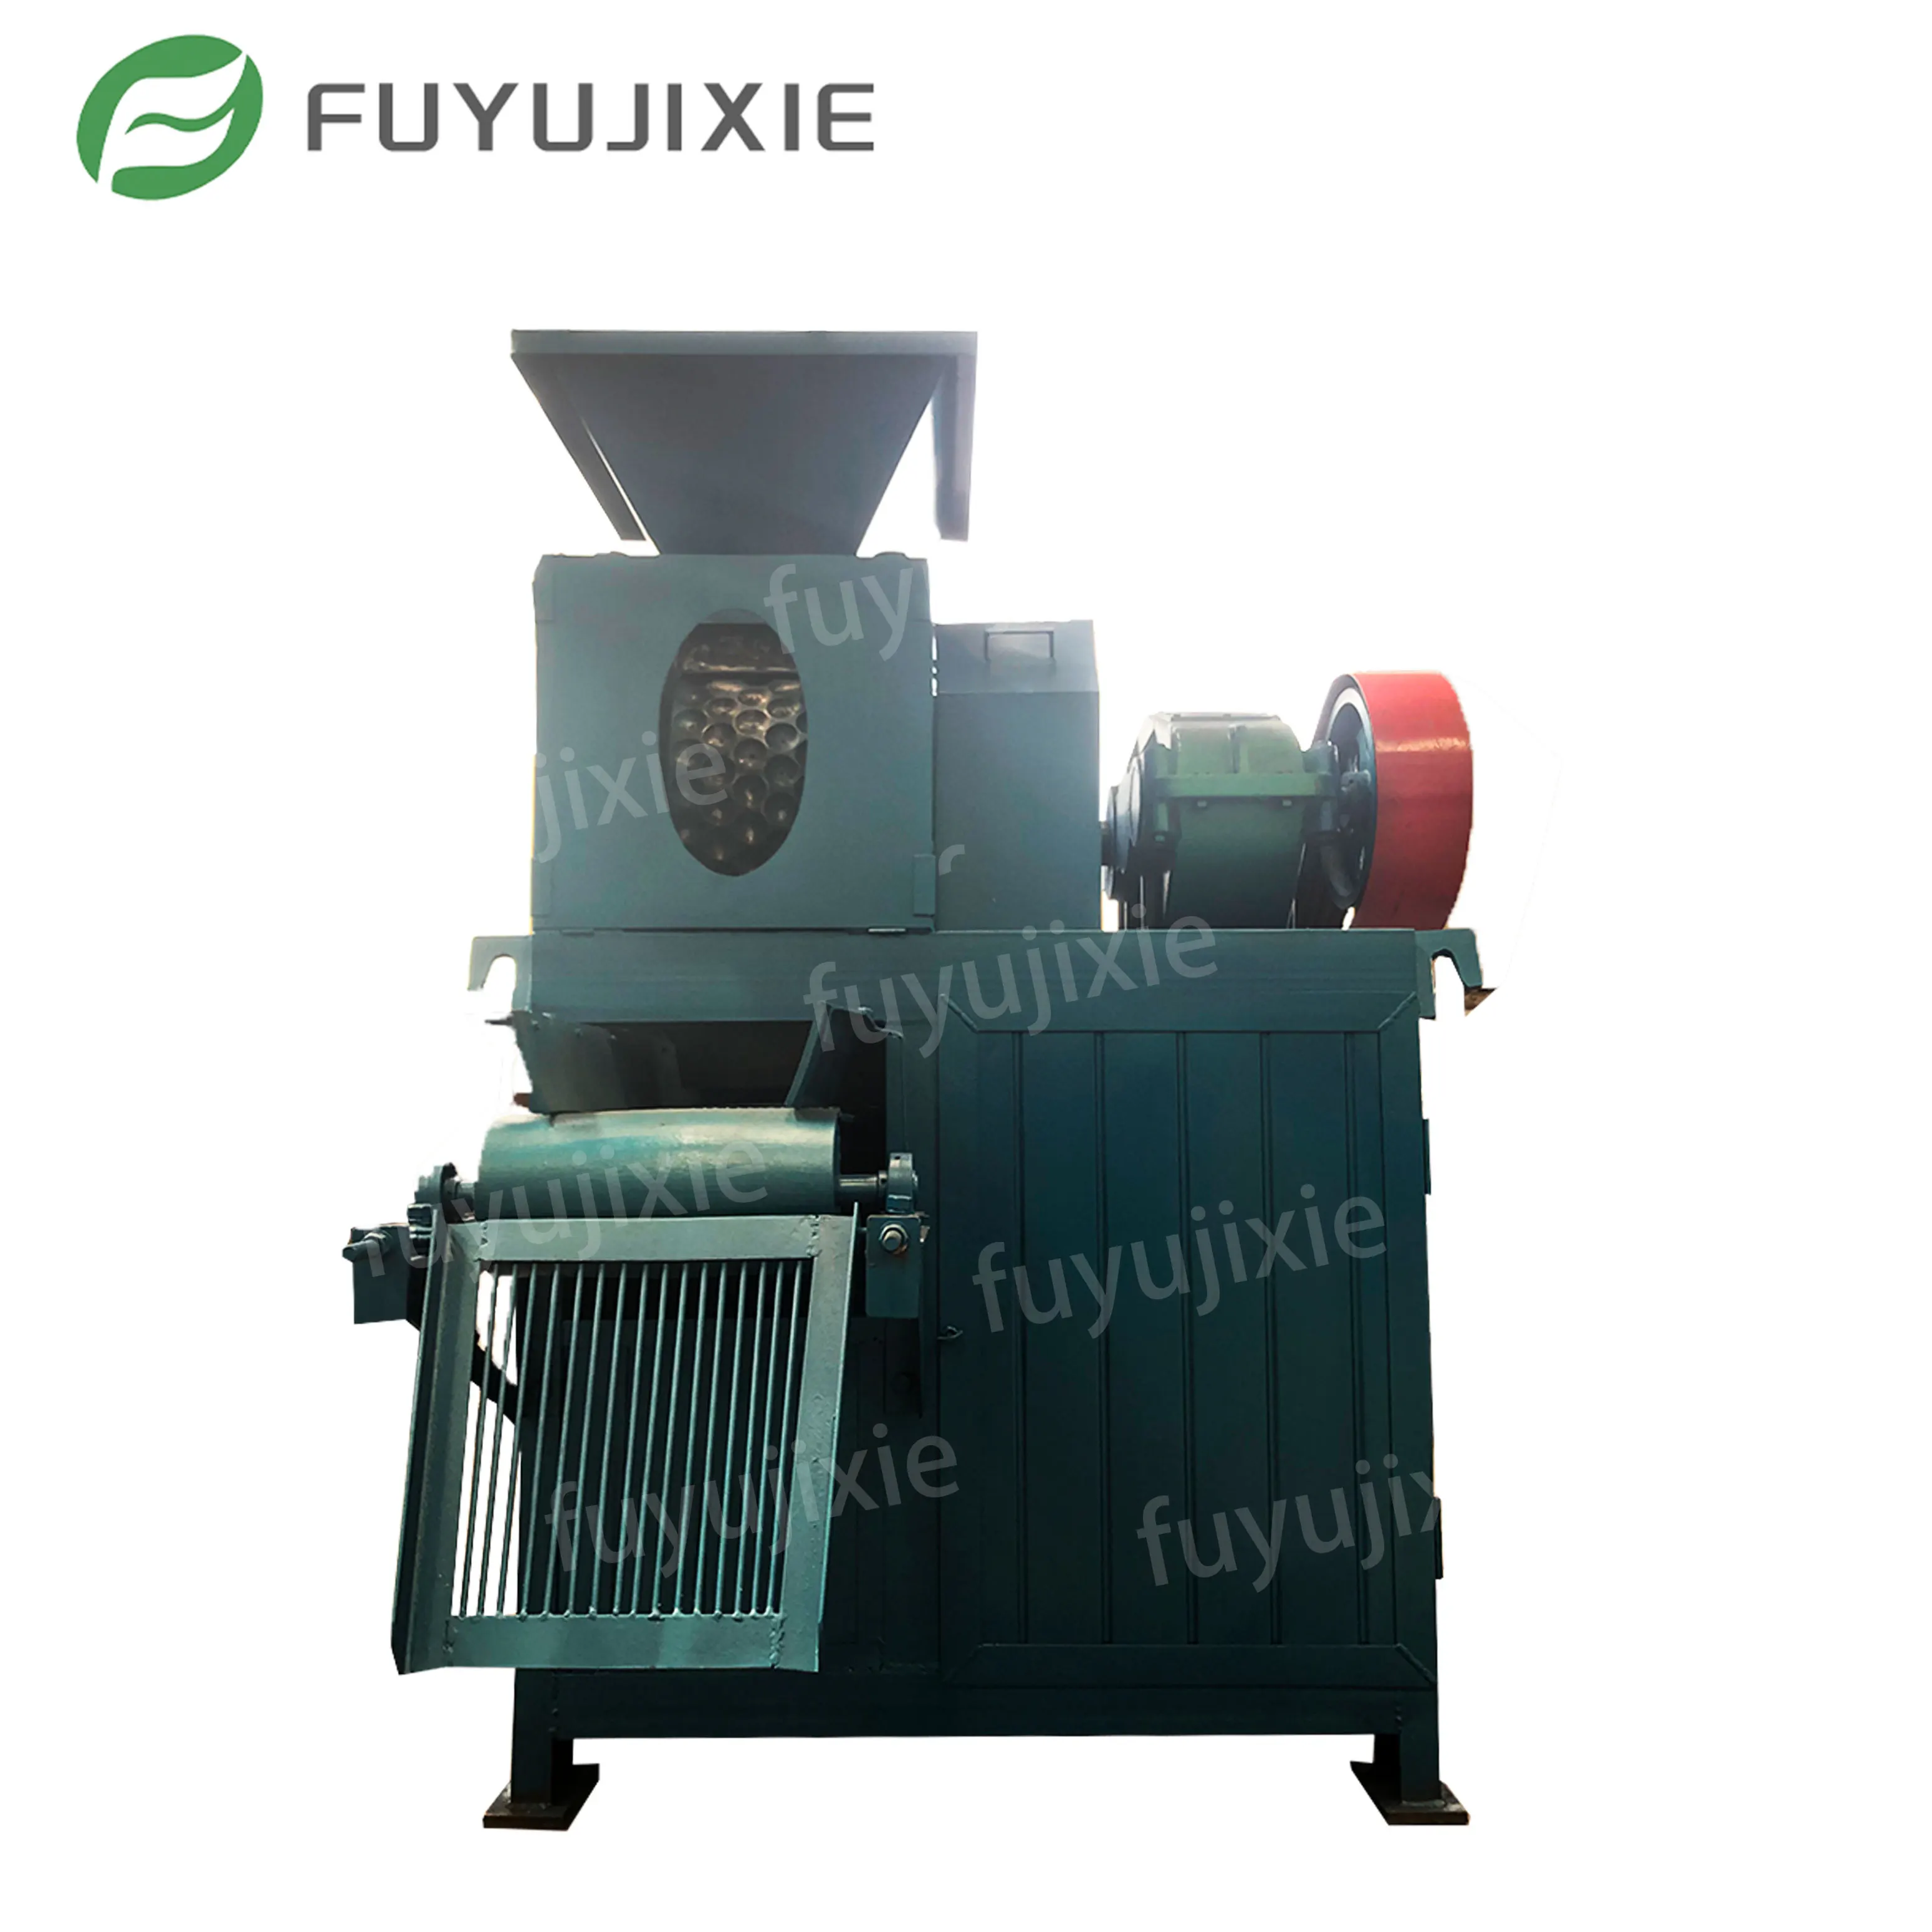 New Energy Saving Coal Machine Press/Mechanical Stamping Briquette Press Machine